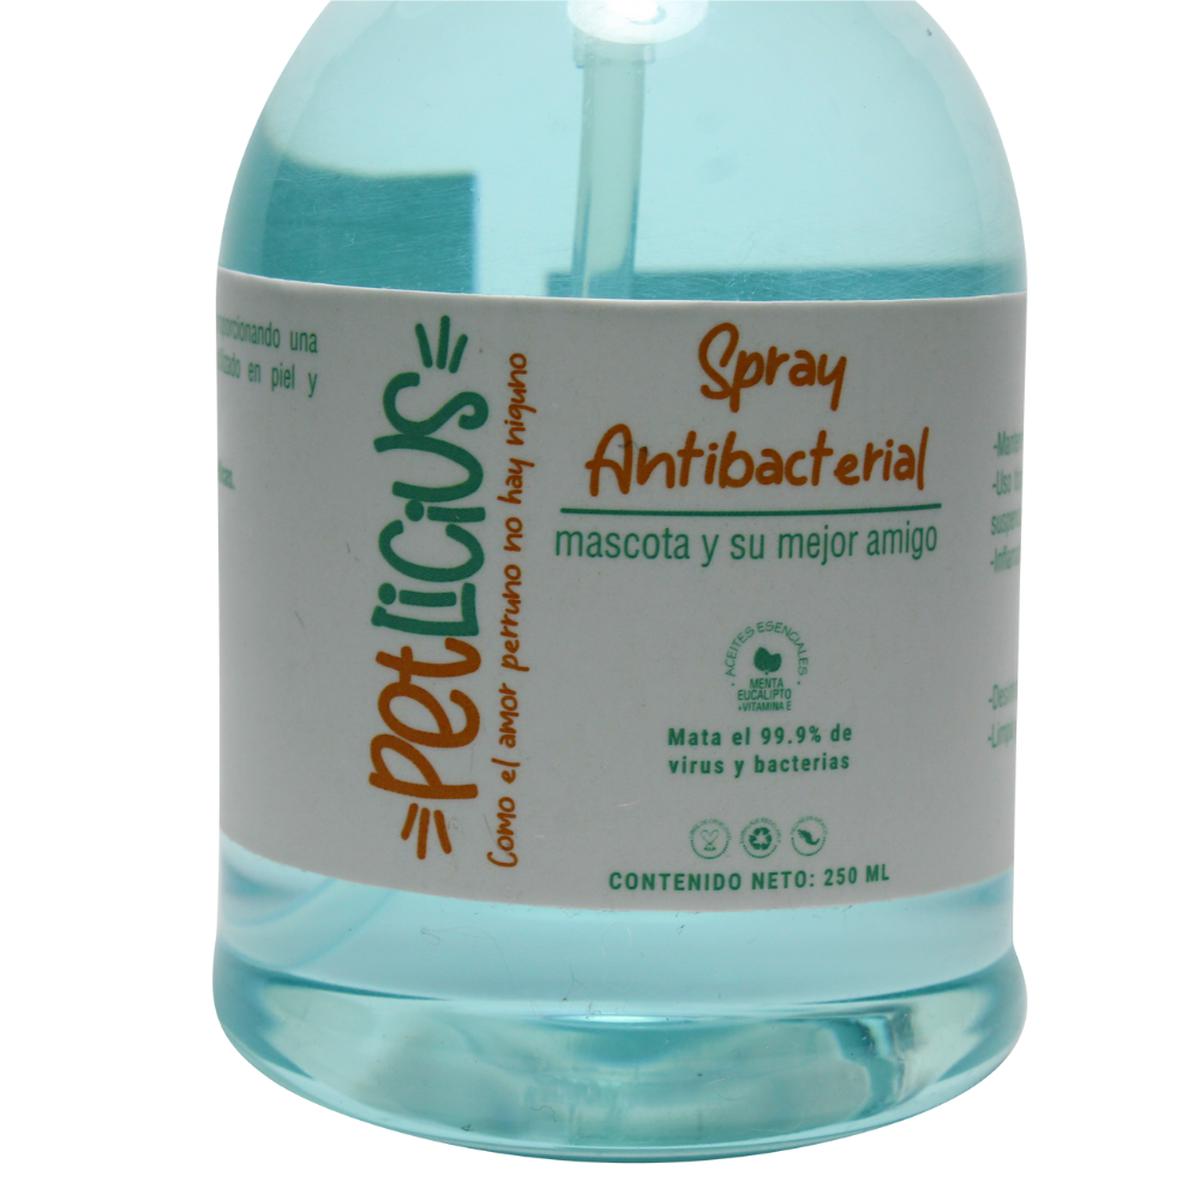 Spray Antibacterial